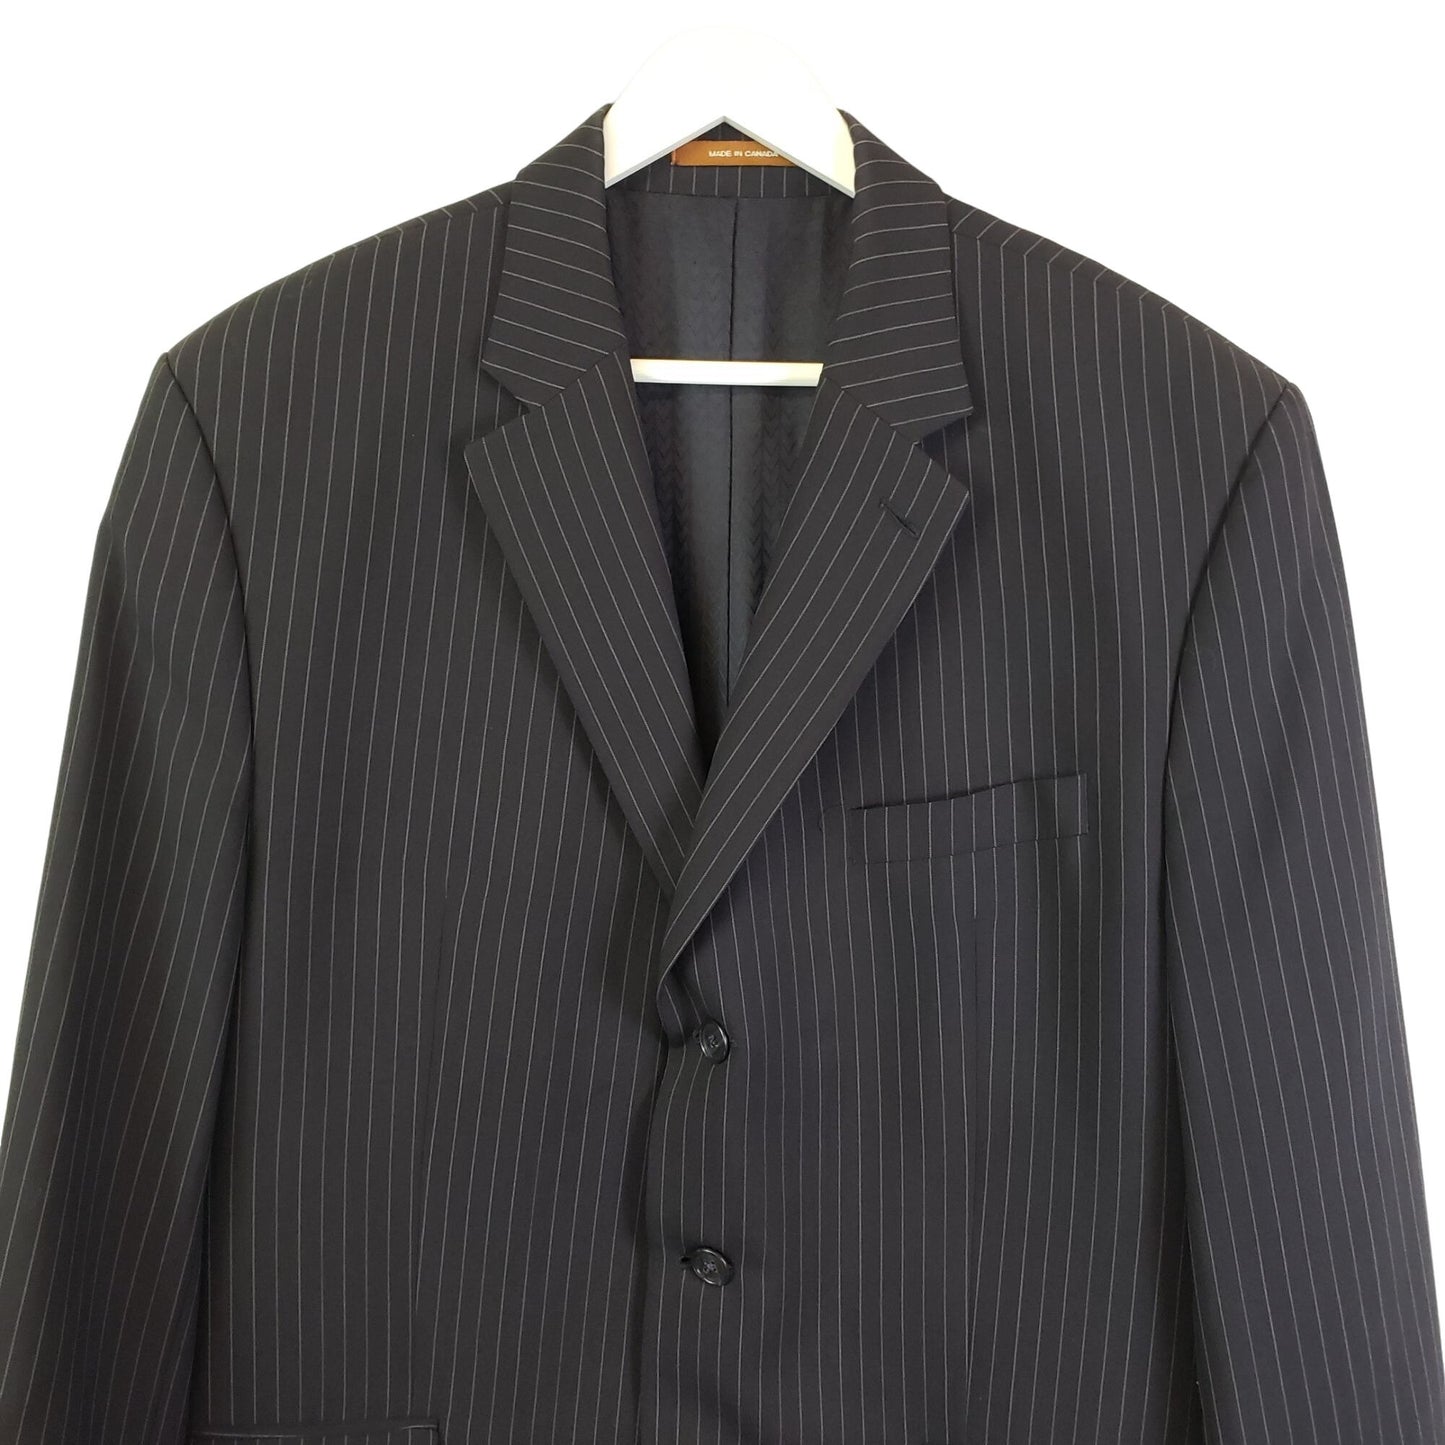 Michael Kors Navy Blue Three Button Pinstripe Suit Jacket Size 44R